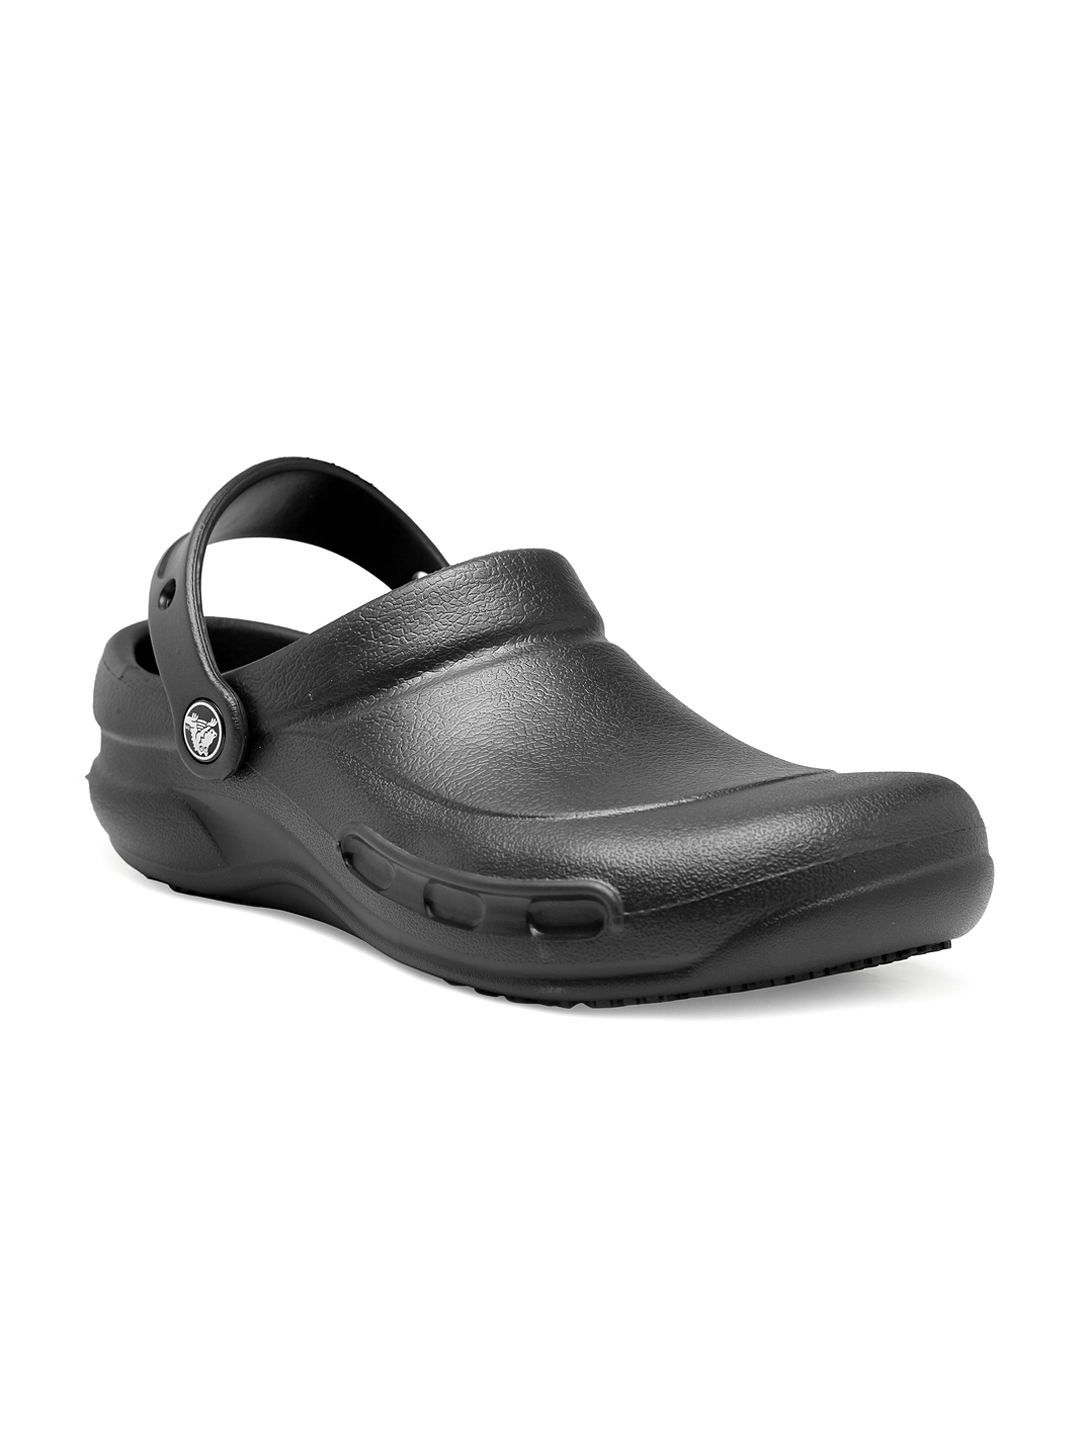 Buy Crocs Bistro Men Black Solid Clogs - Flip Flops for Men 7178380 ...